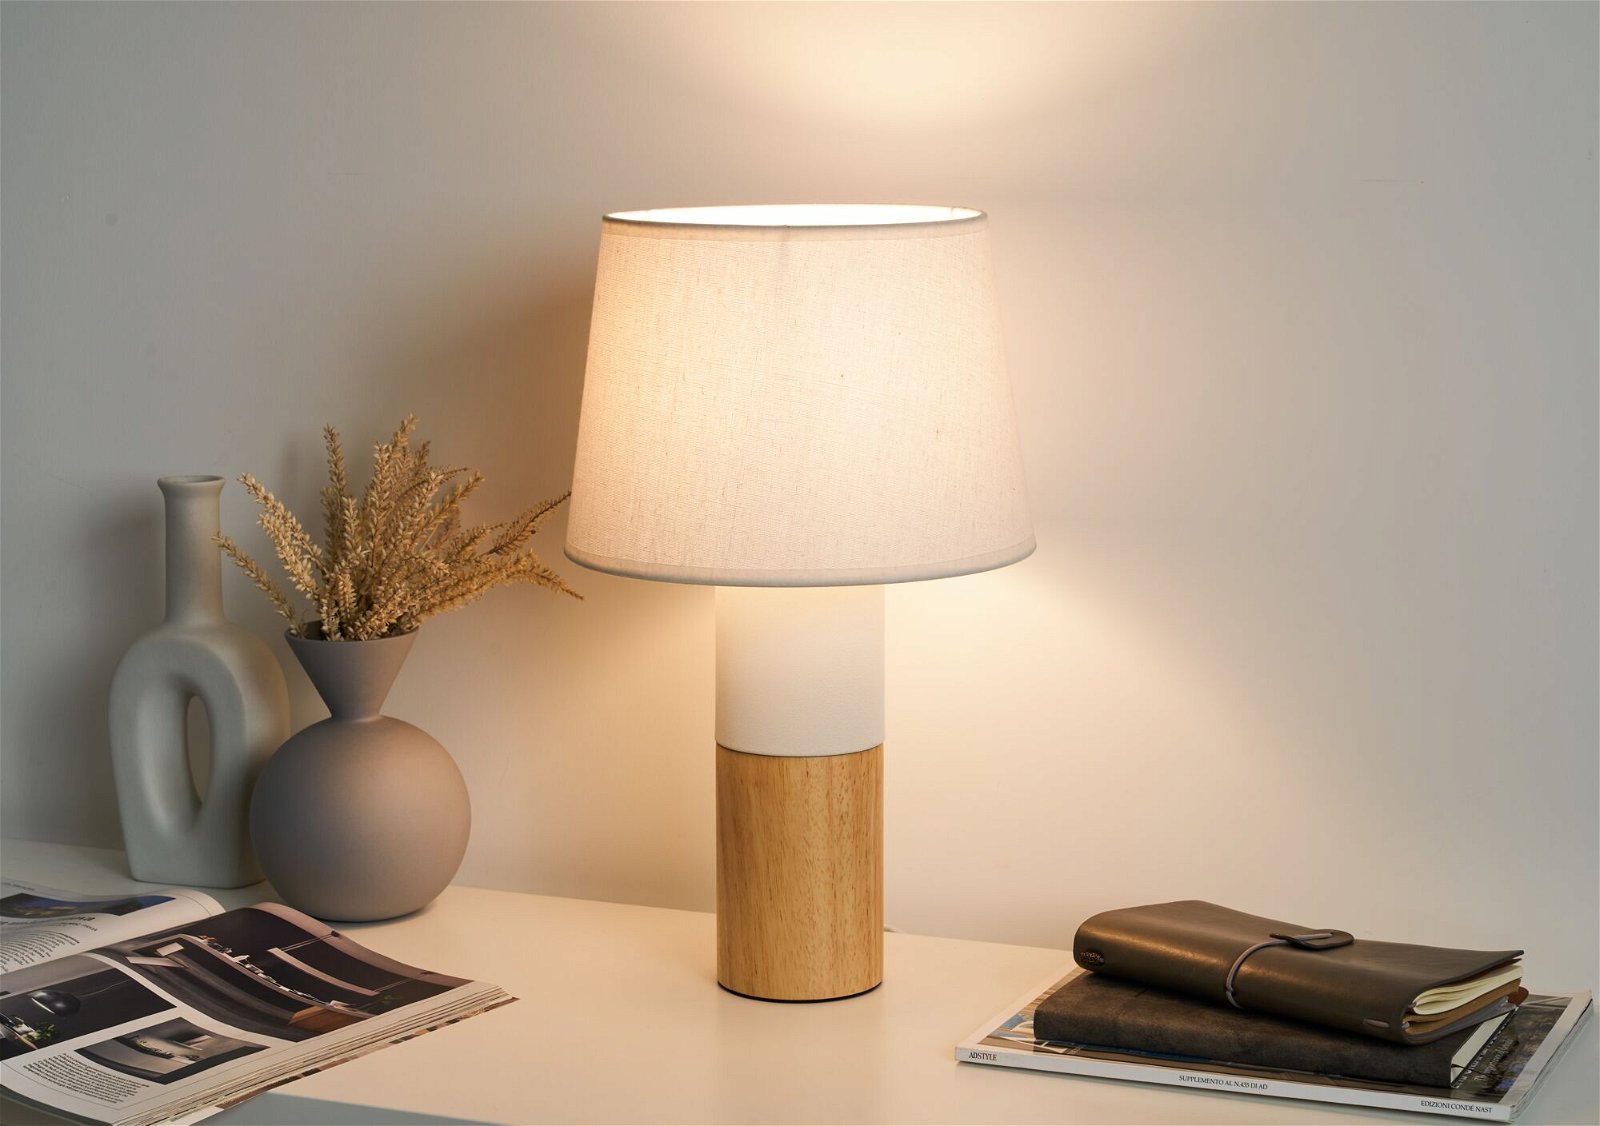 Pauleen Table luminaire Woody Elegance E27 max. 20W Wood/White